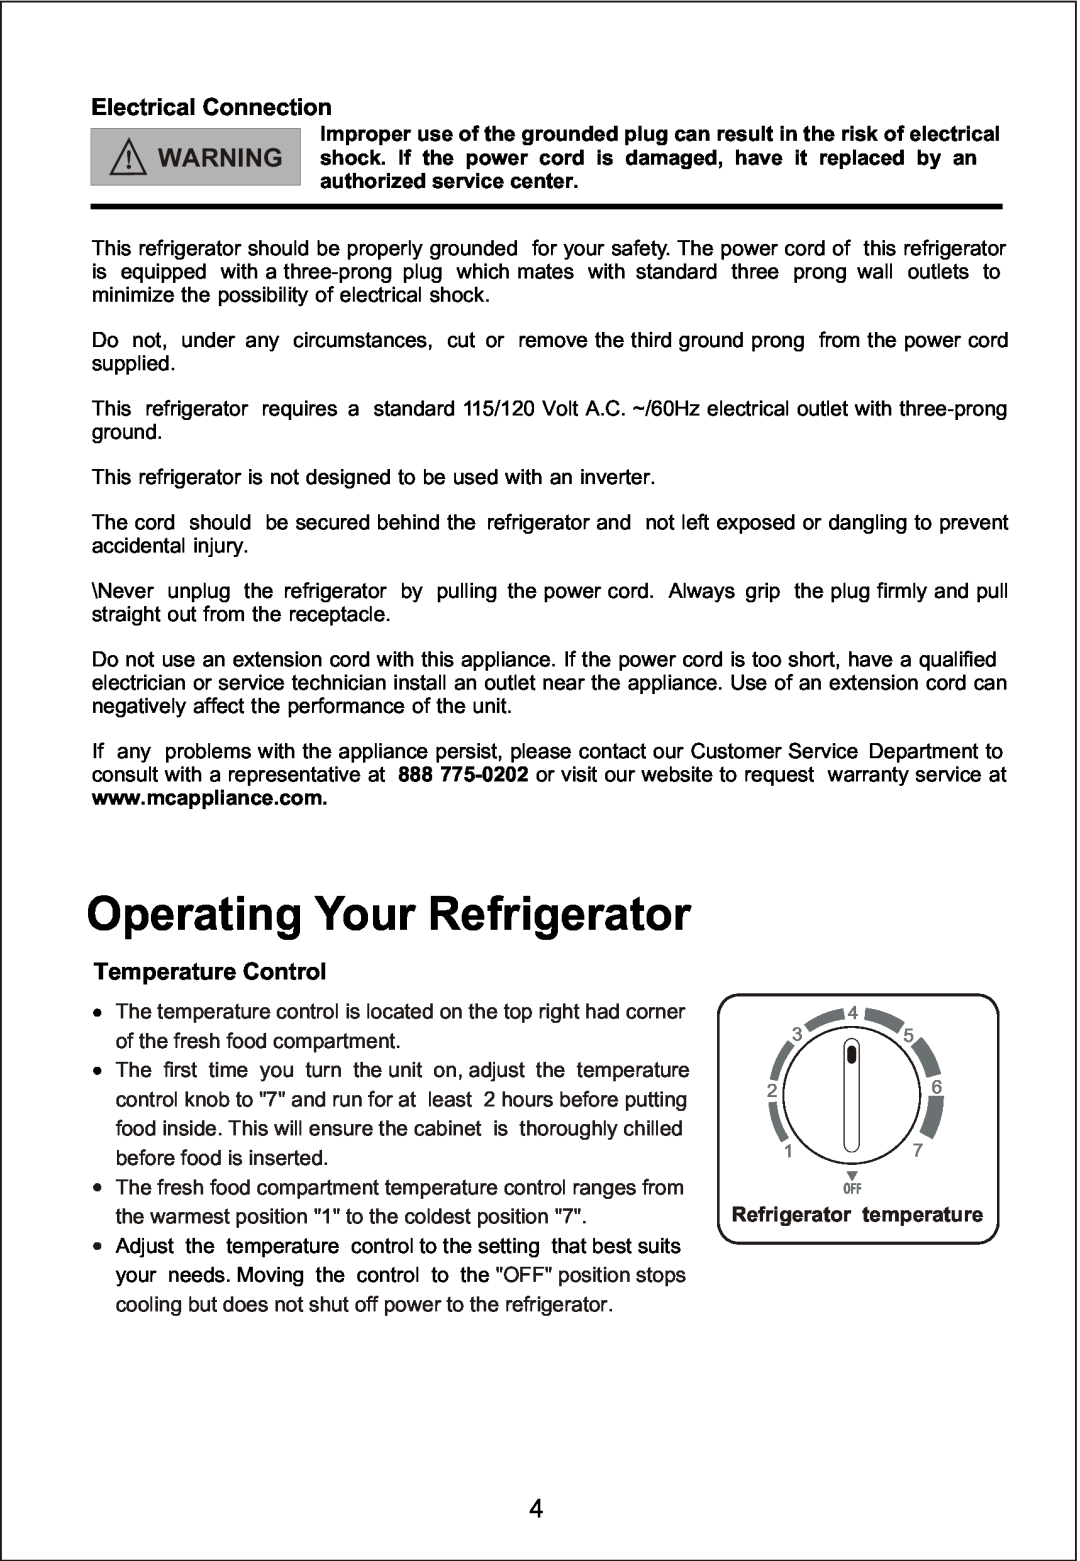 Magic Chef MCBR510W Operating Your Refrigerator, Electrical Connection, Temperature Control, Refrigerator temperature 